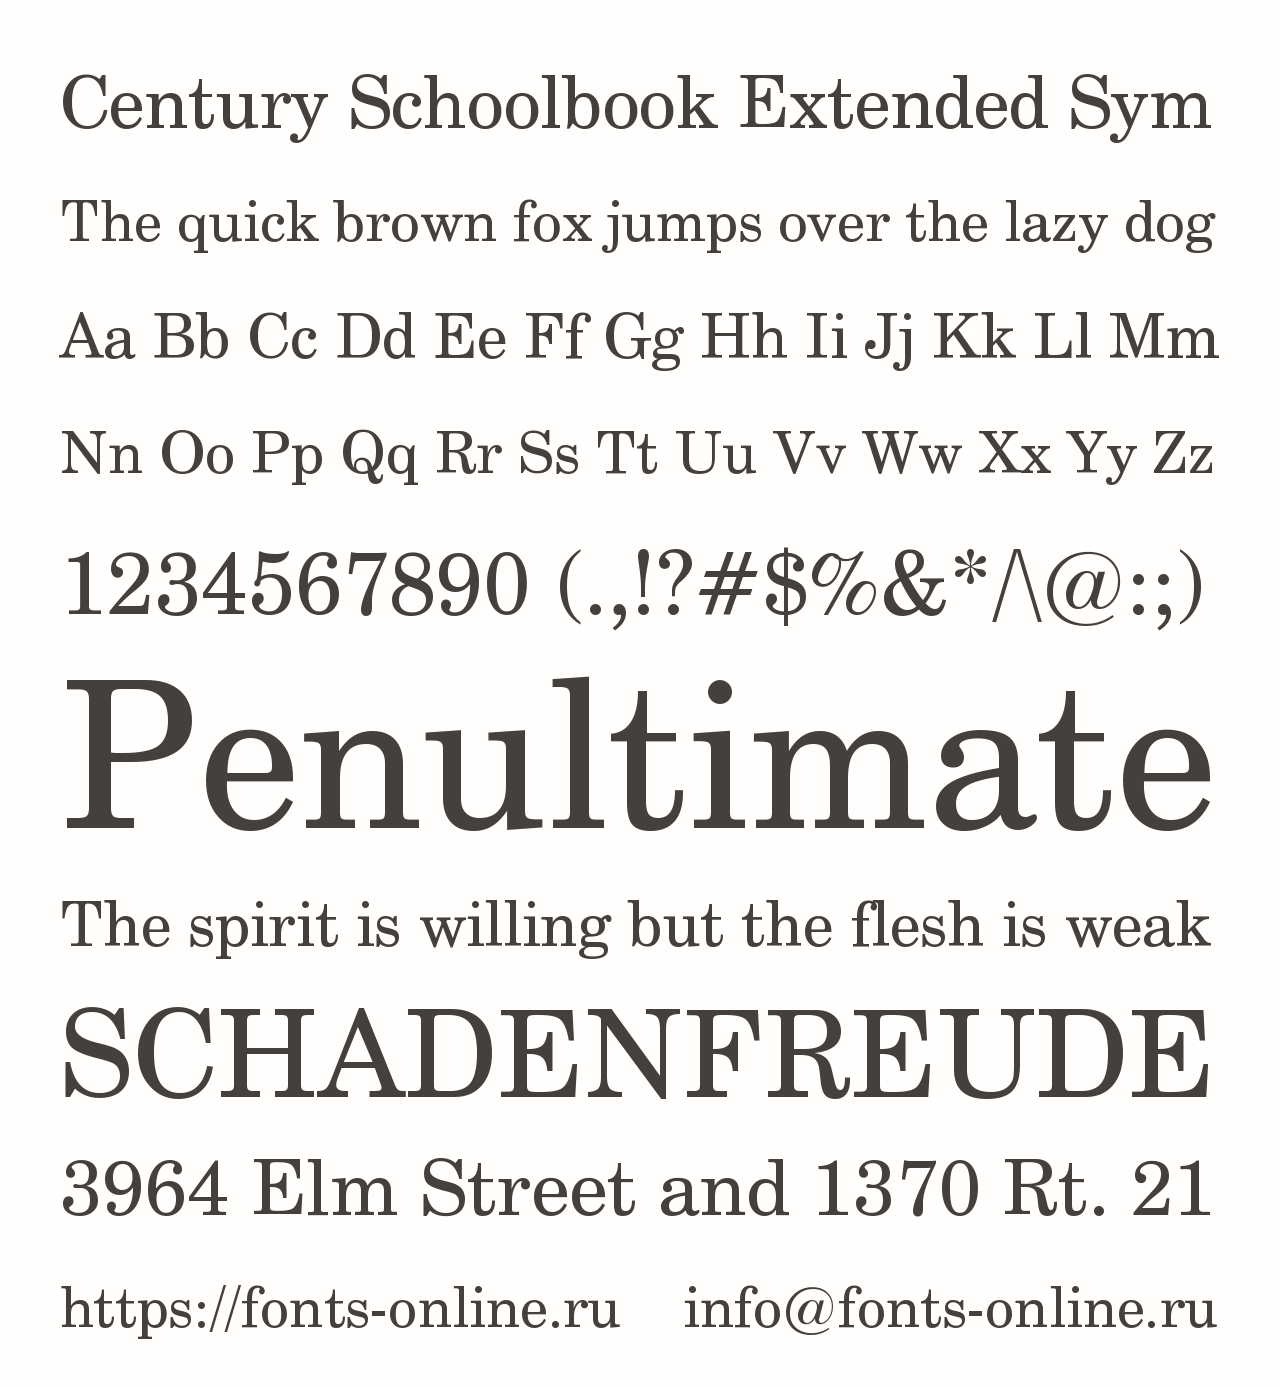 Шрифт Century Schoolbook Extended Sym